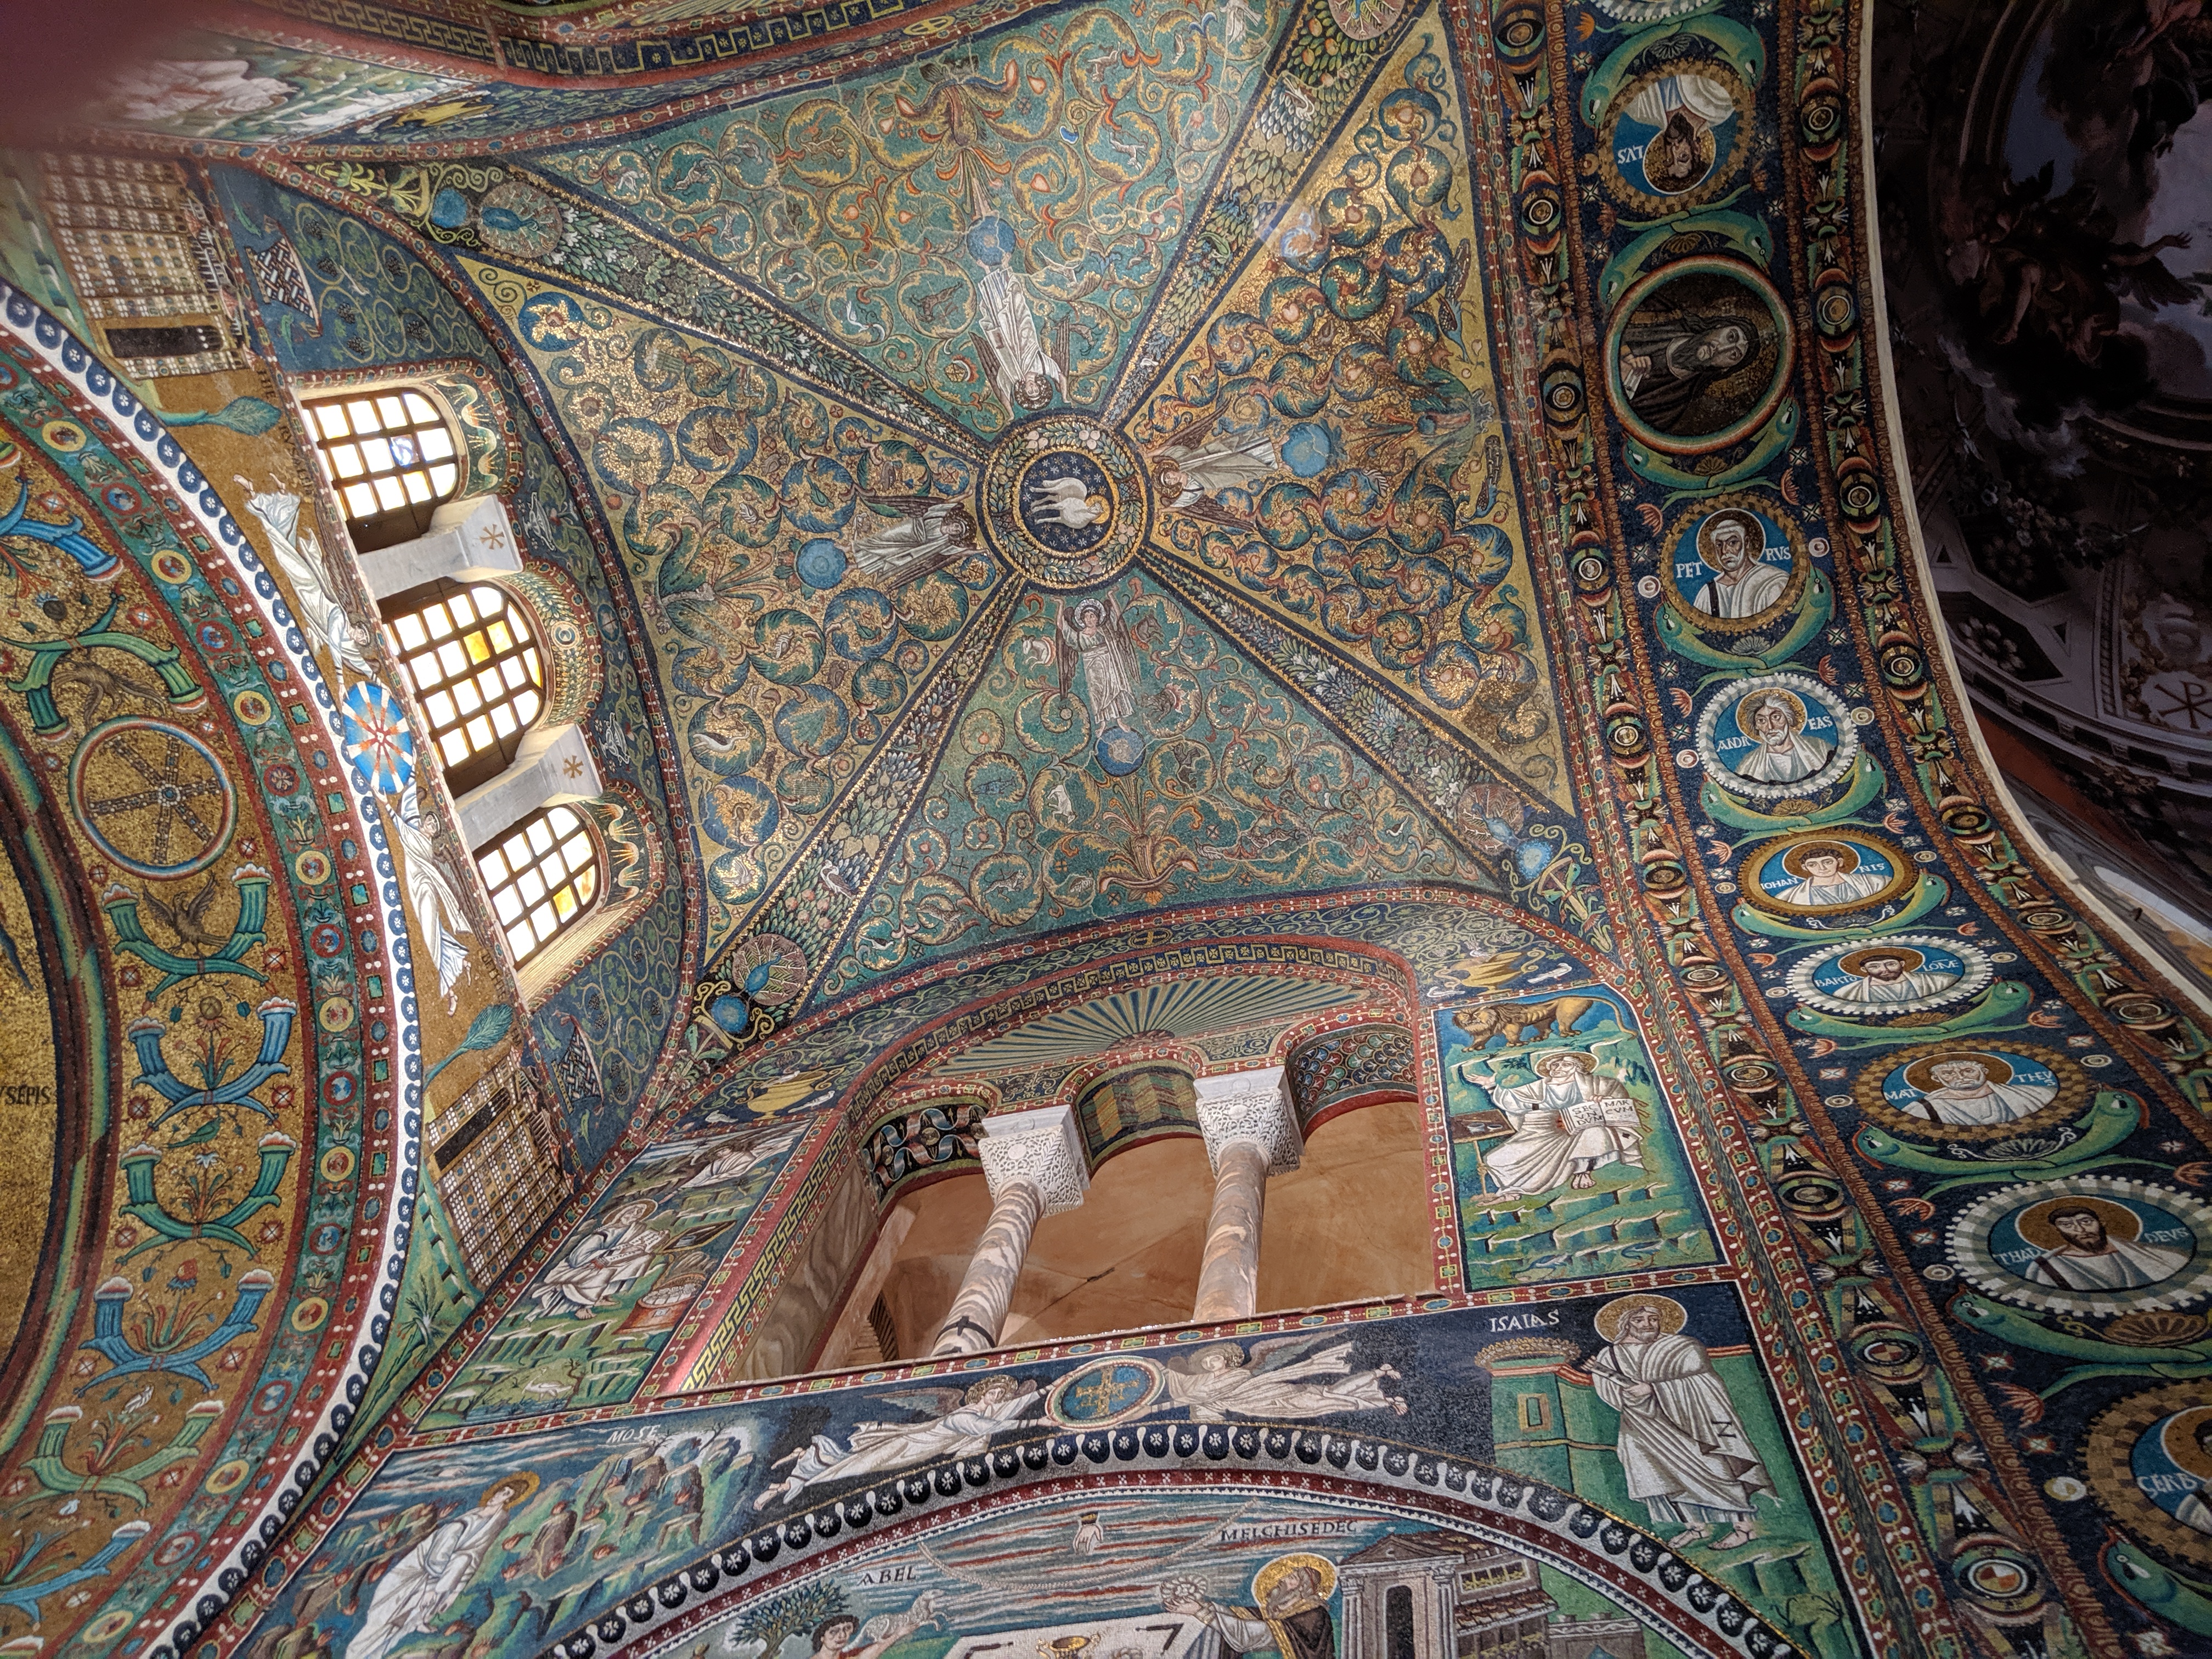 photo: https://upload.wikimedia.org/wikipedia/commons/1/10/San_Vitale_Central_Ceiling_Mosaic.jpg